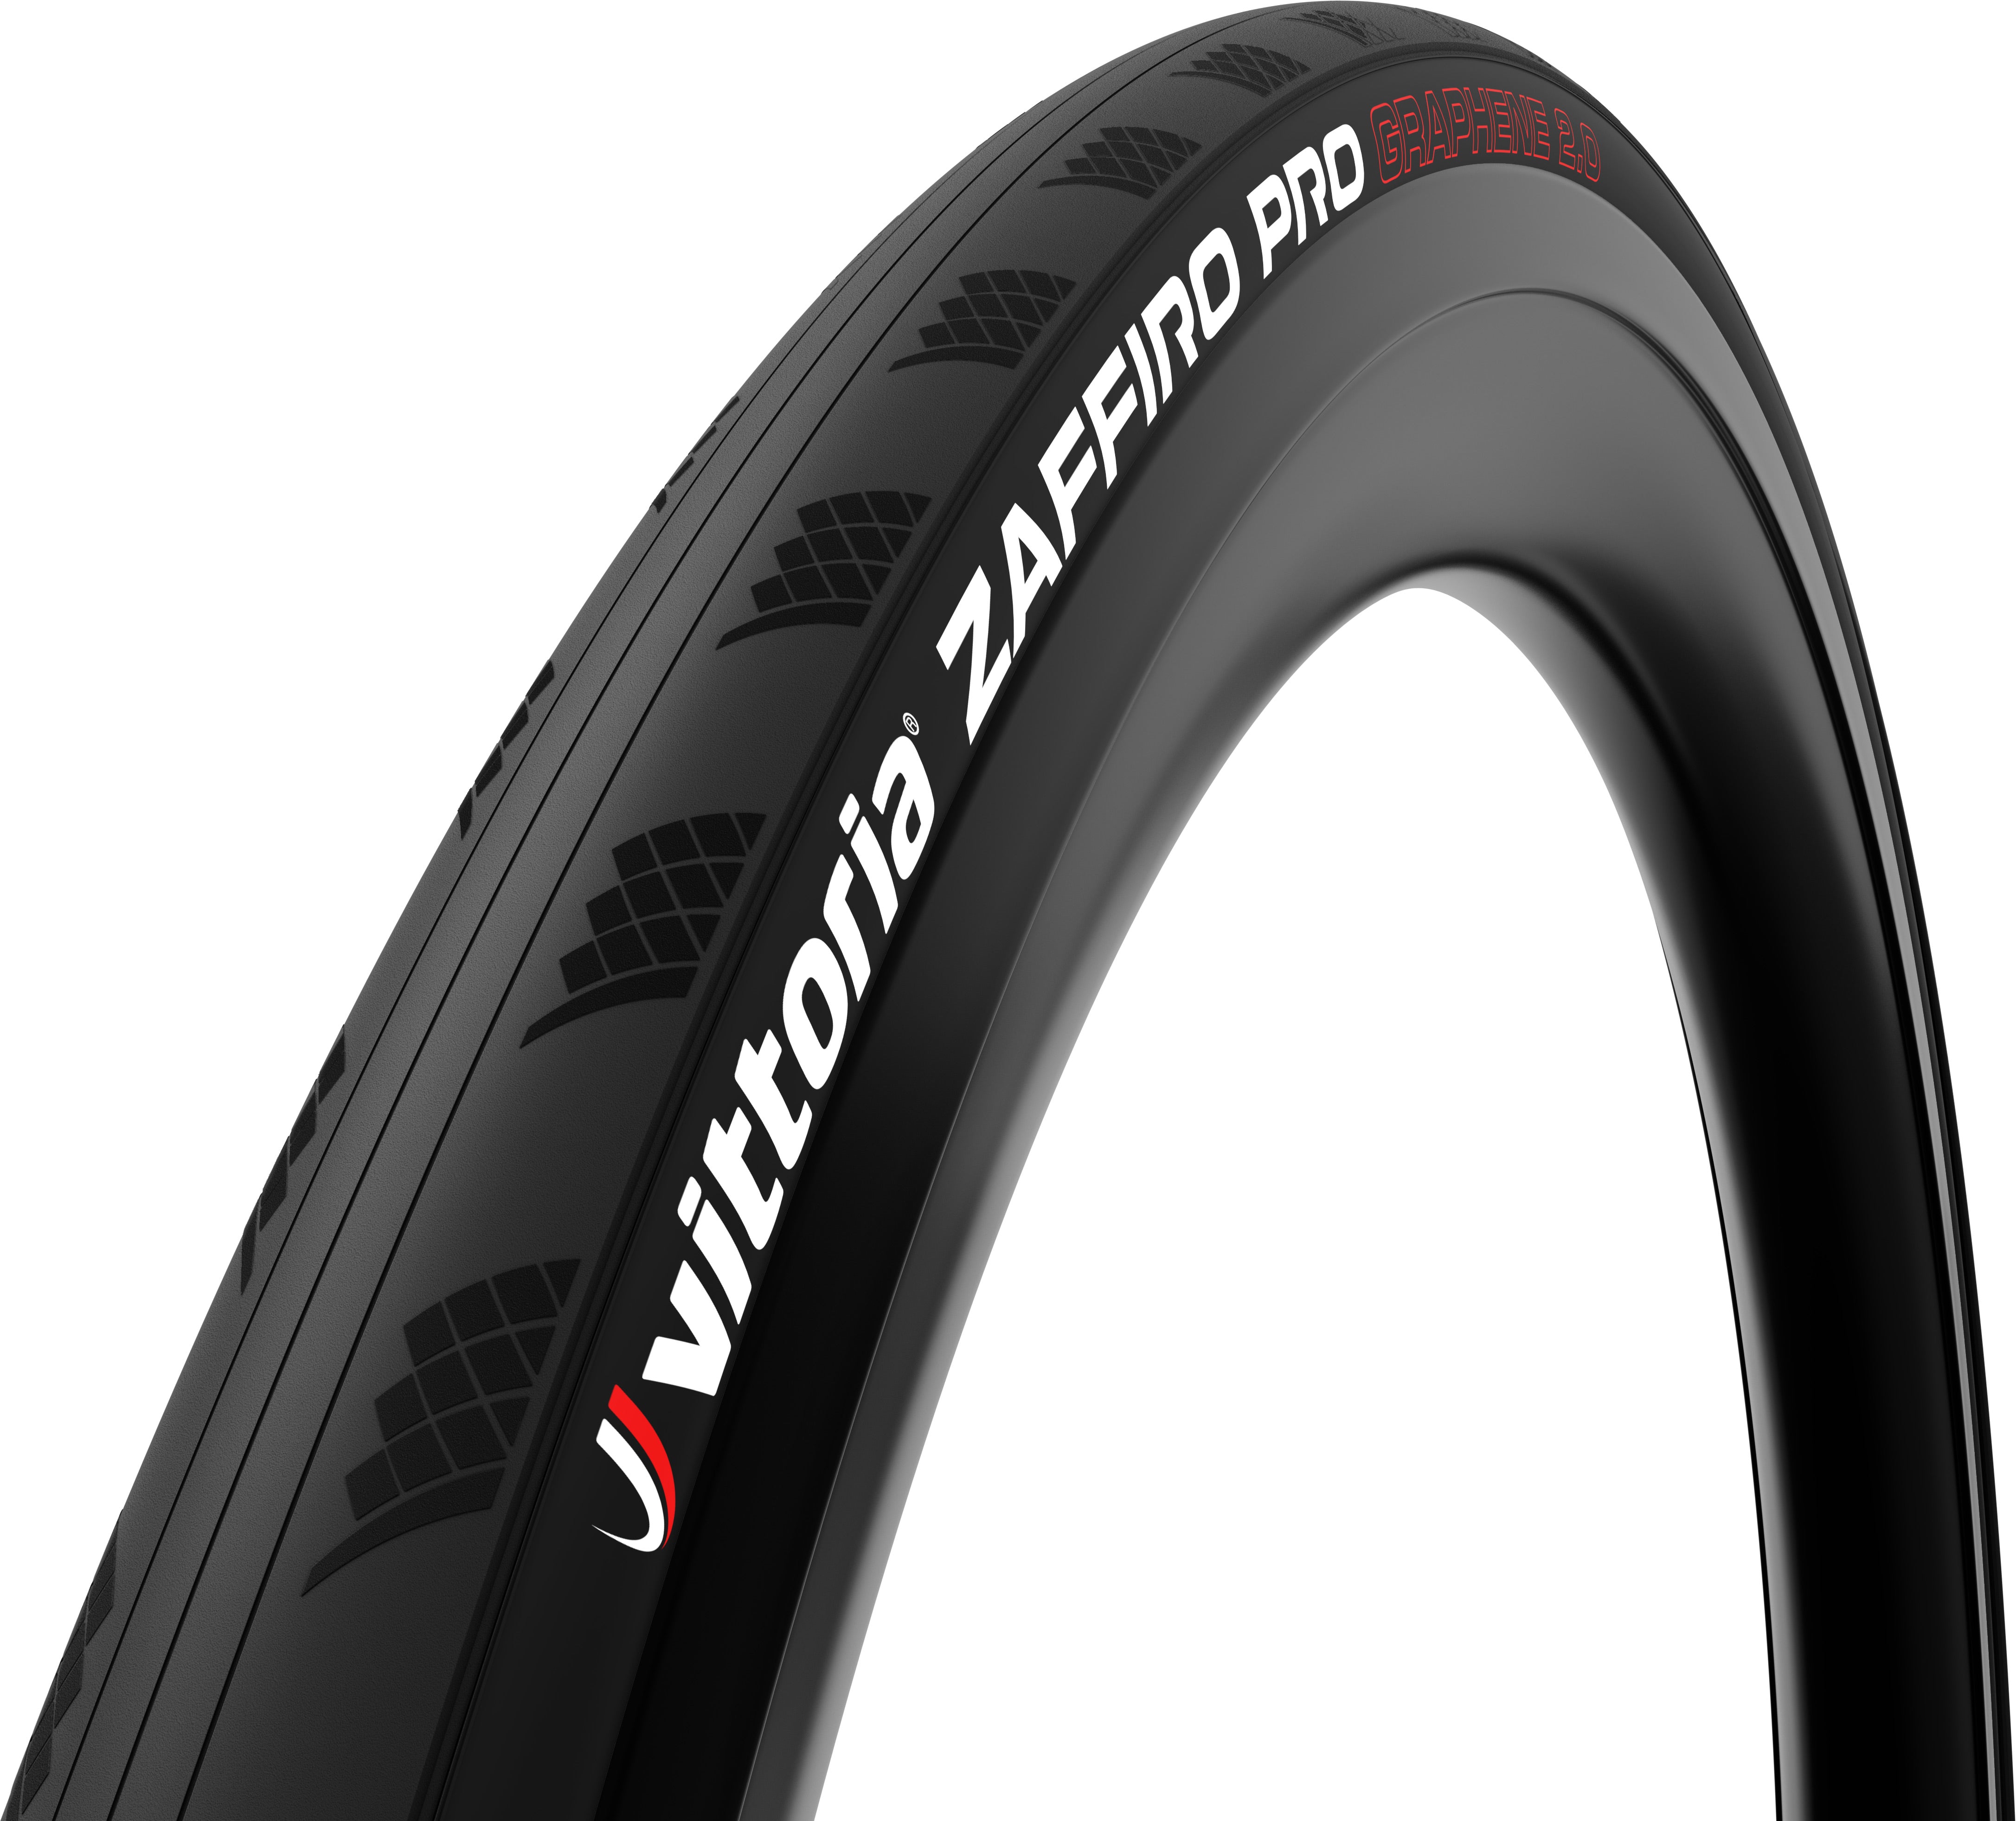 Zaffiro Pro V 700x25c Fold Full Black G2.0 Clincher Tyre-Bicycle Tires-Vittoria-Chain Driven Cycles-Bike Shop-Ireland